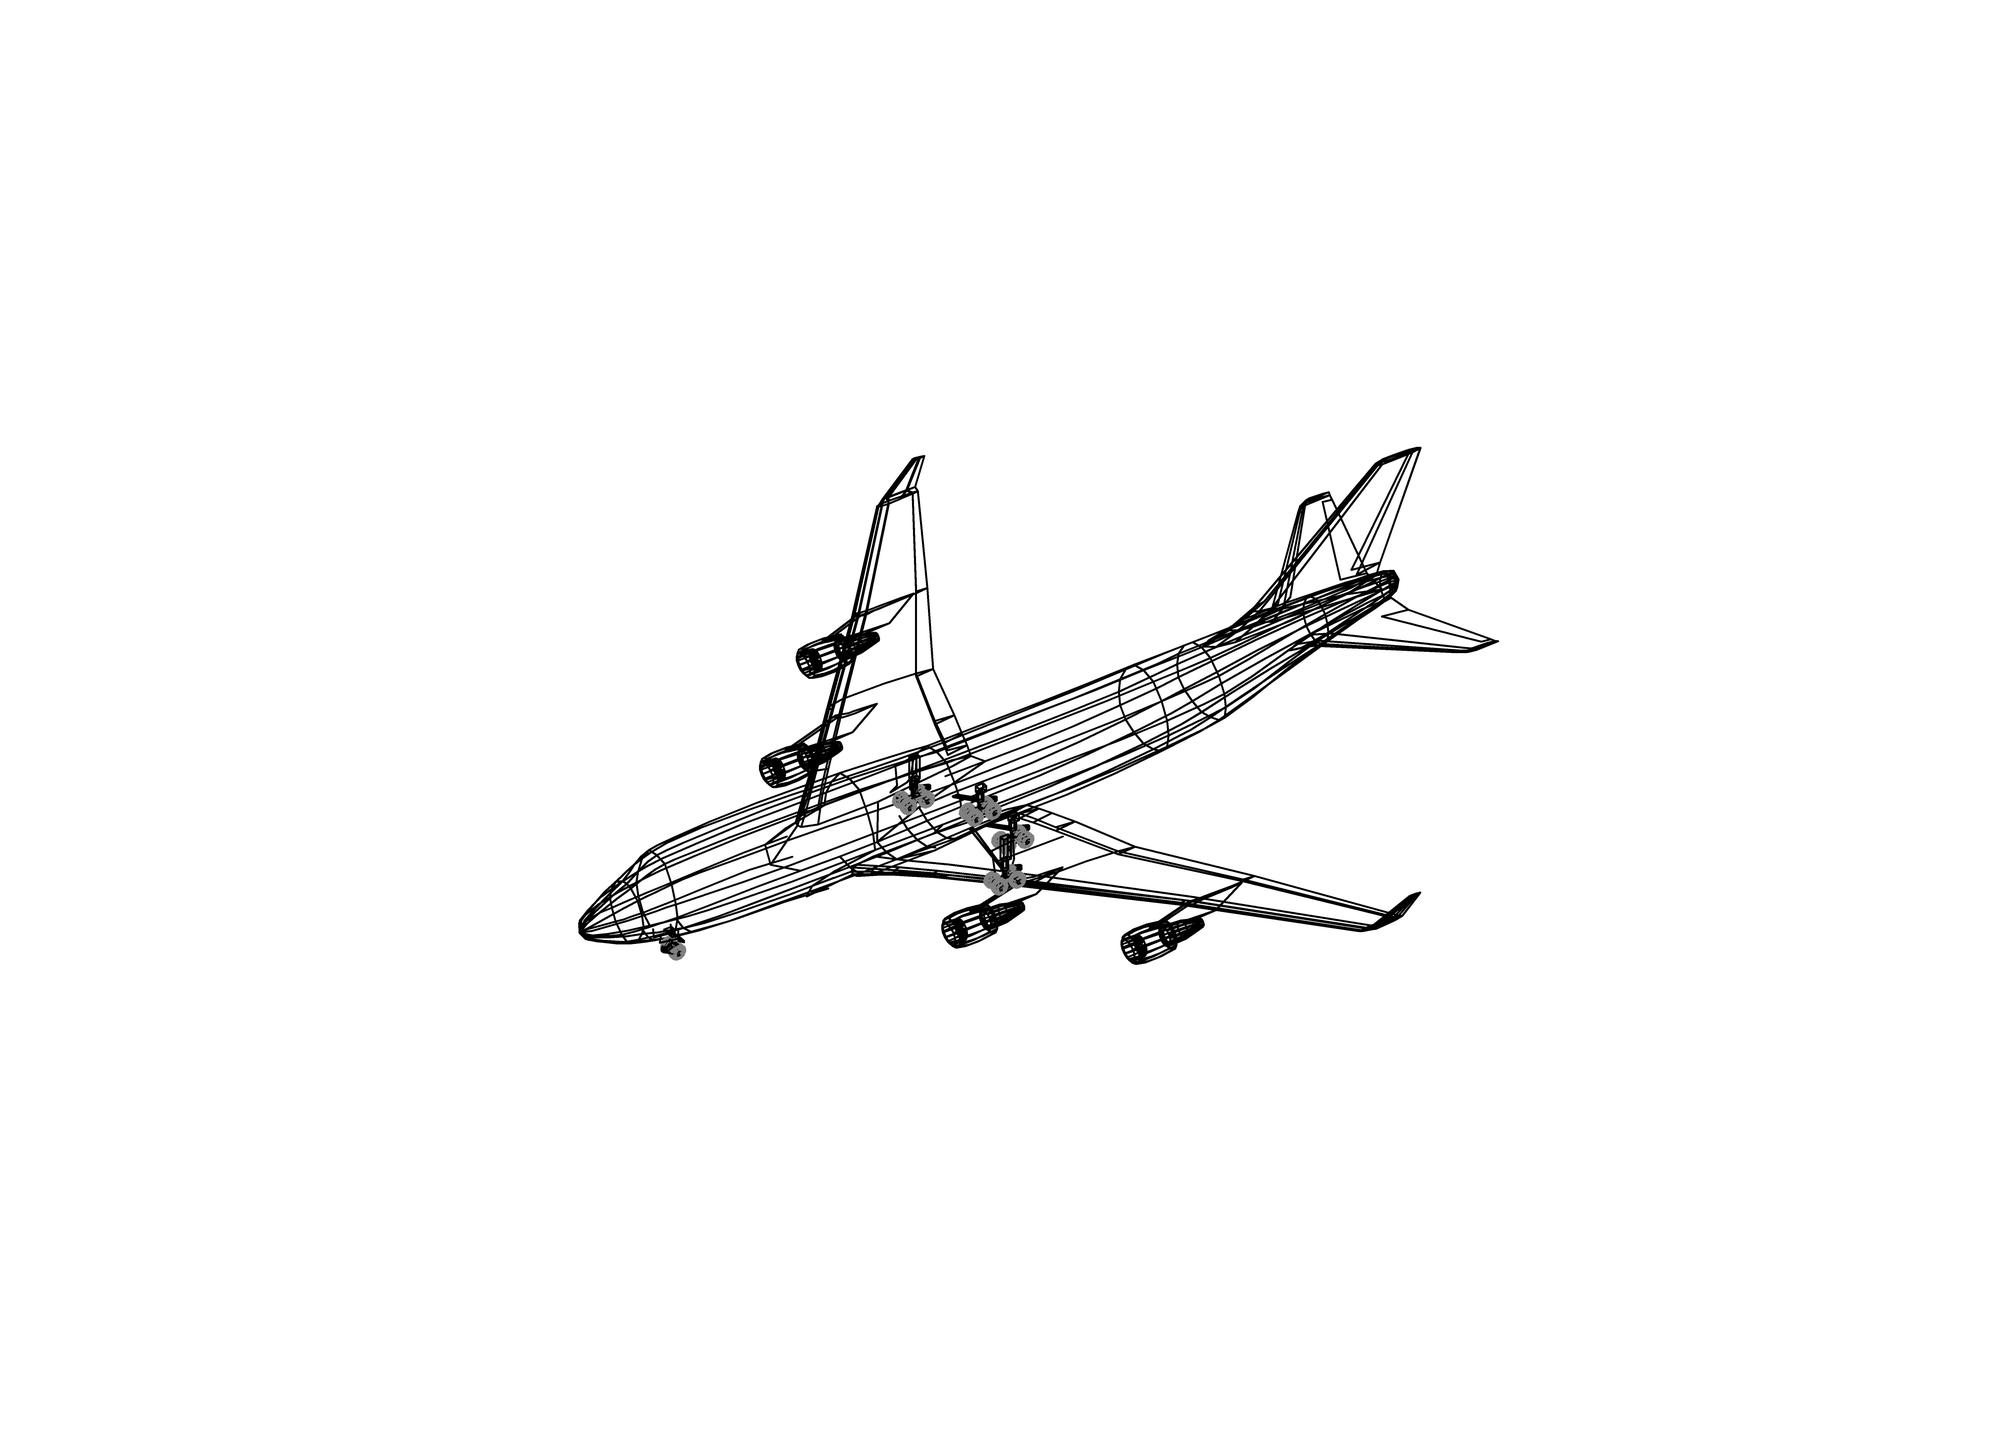 Airplane 8 3D dwg